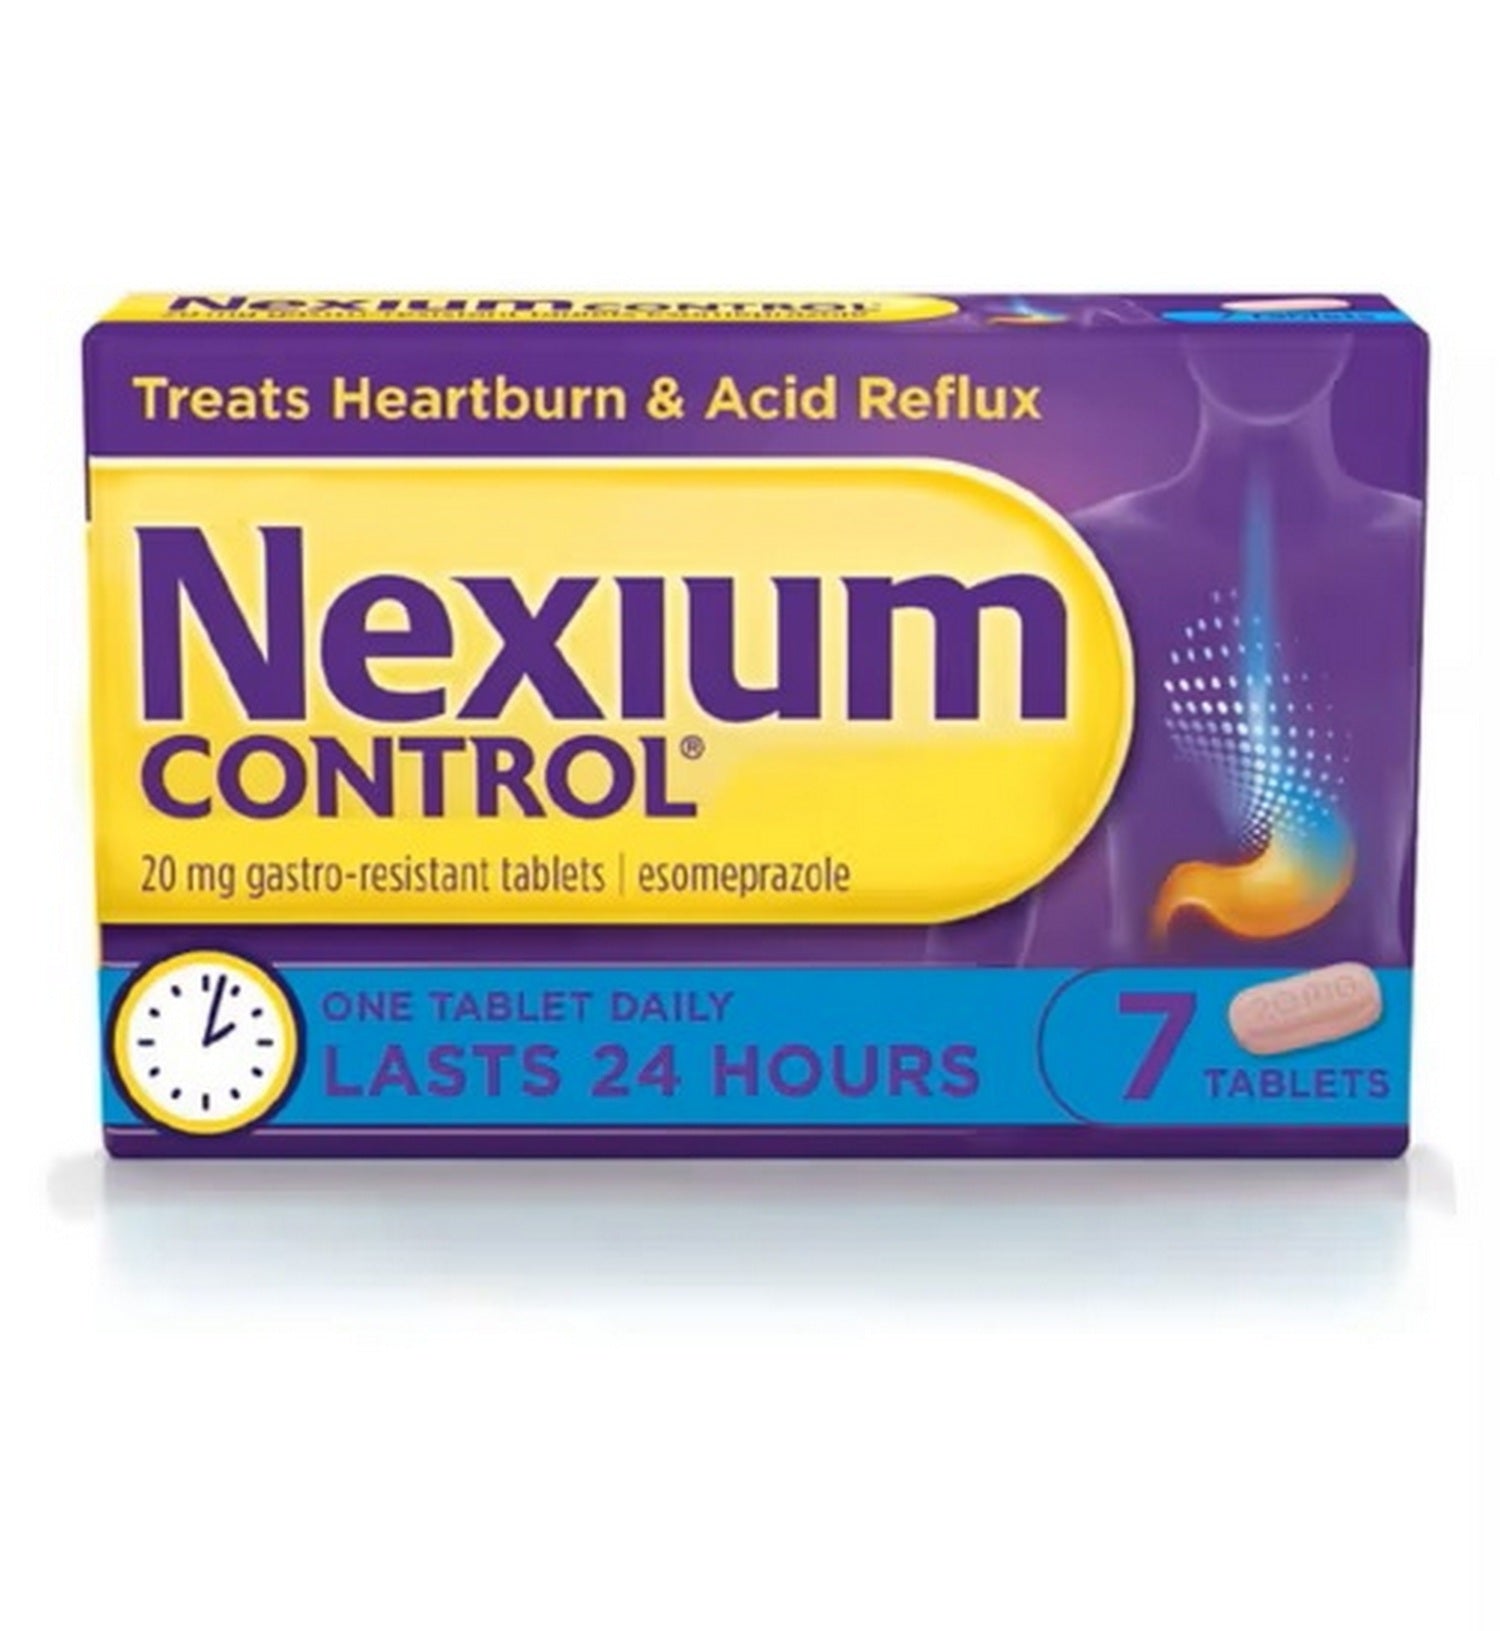 Nexium Control - 7 Tablets